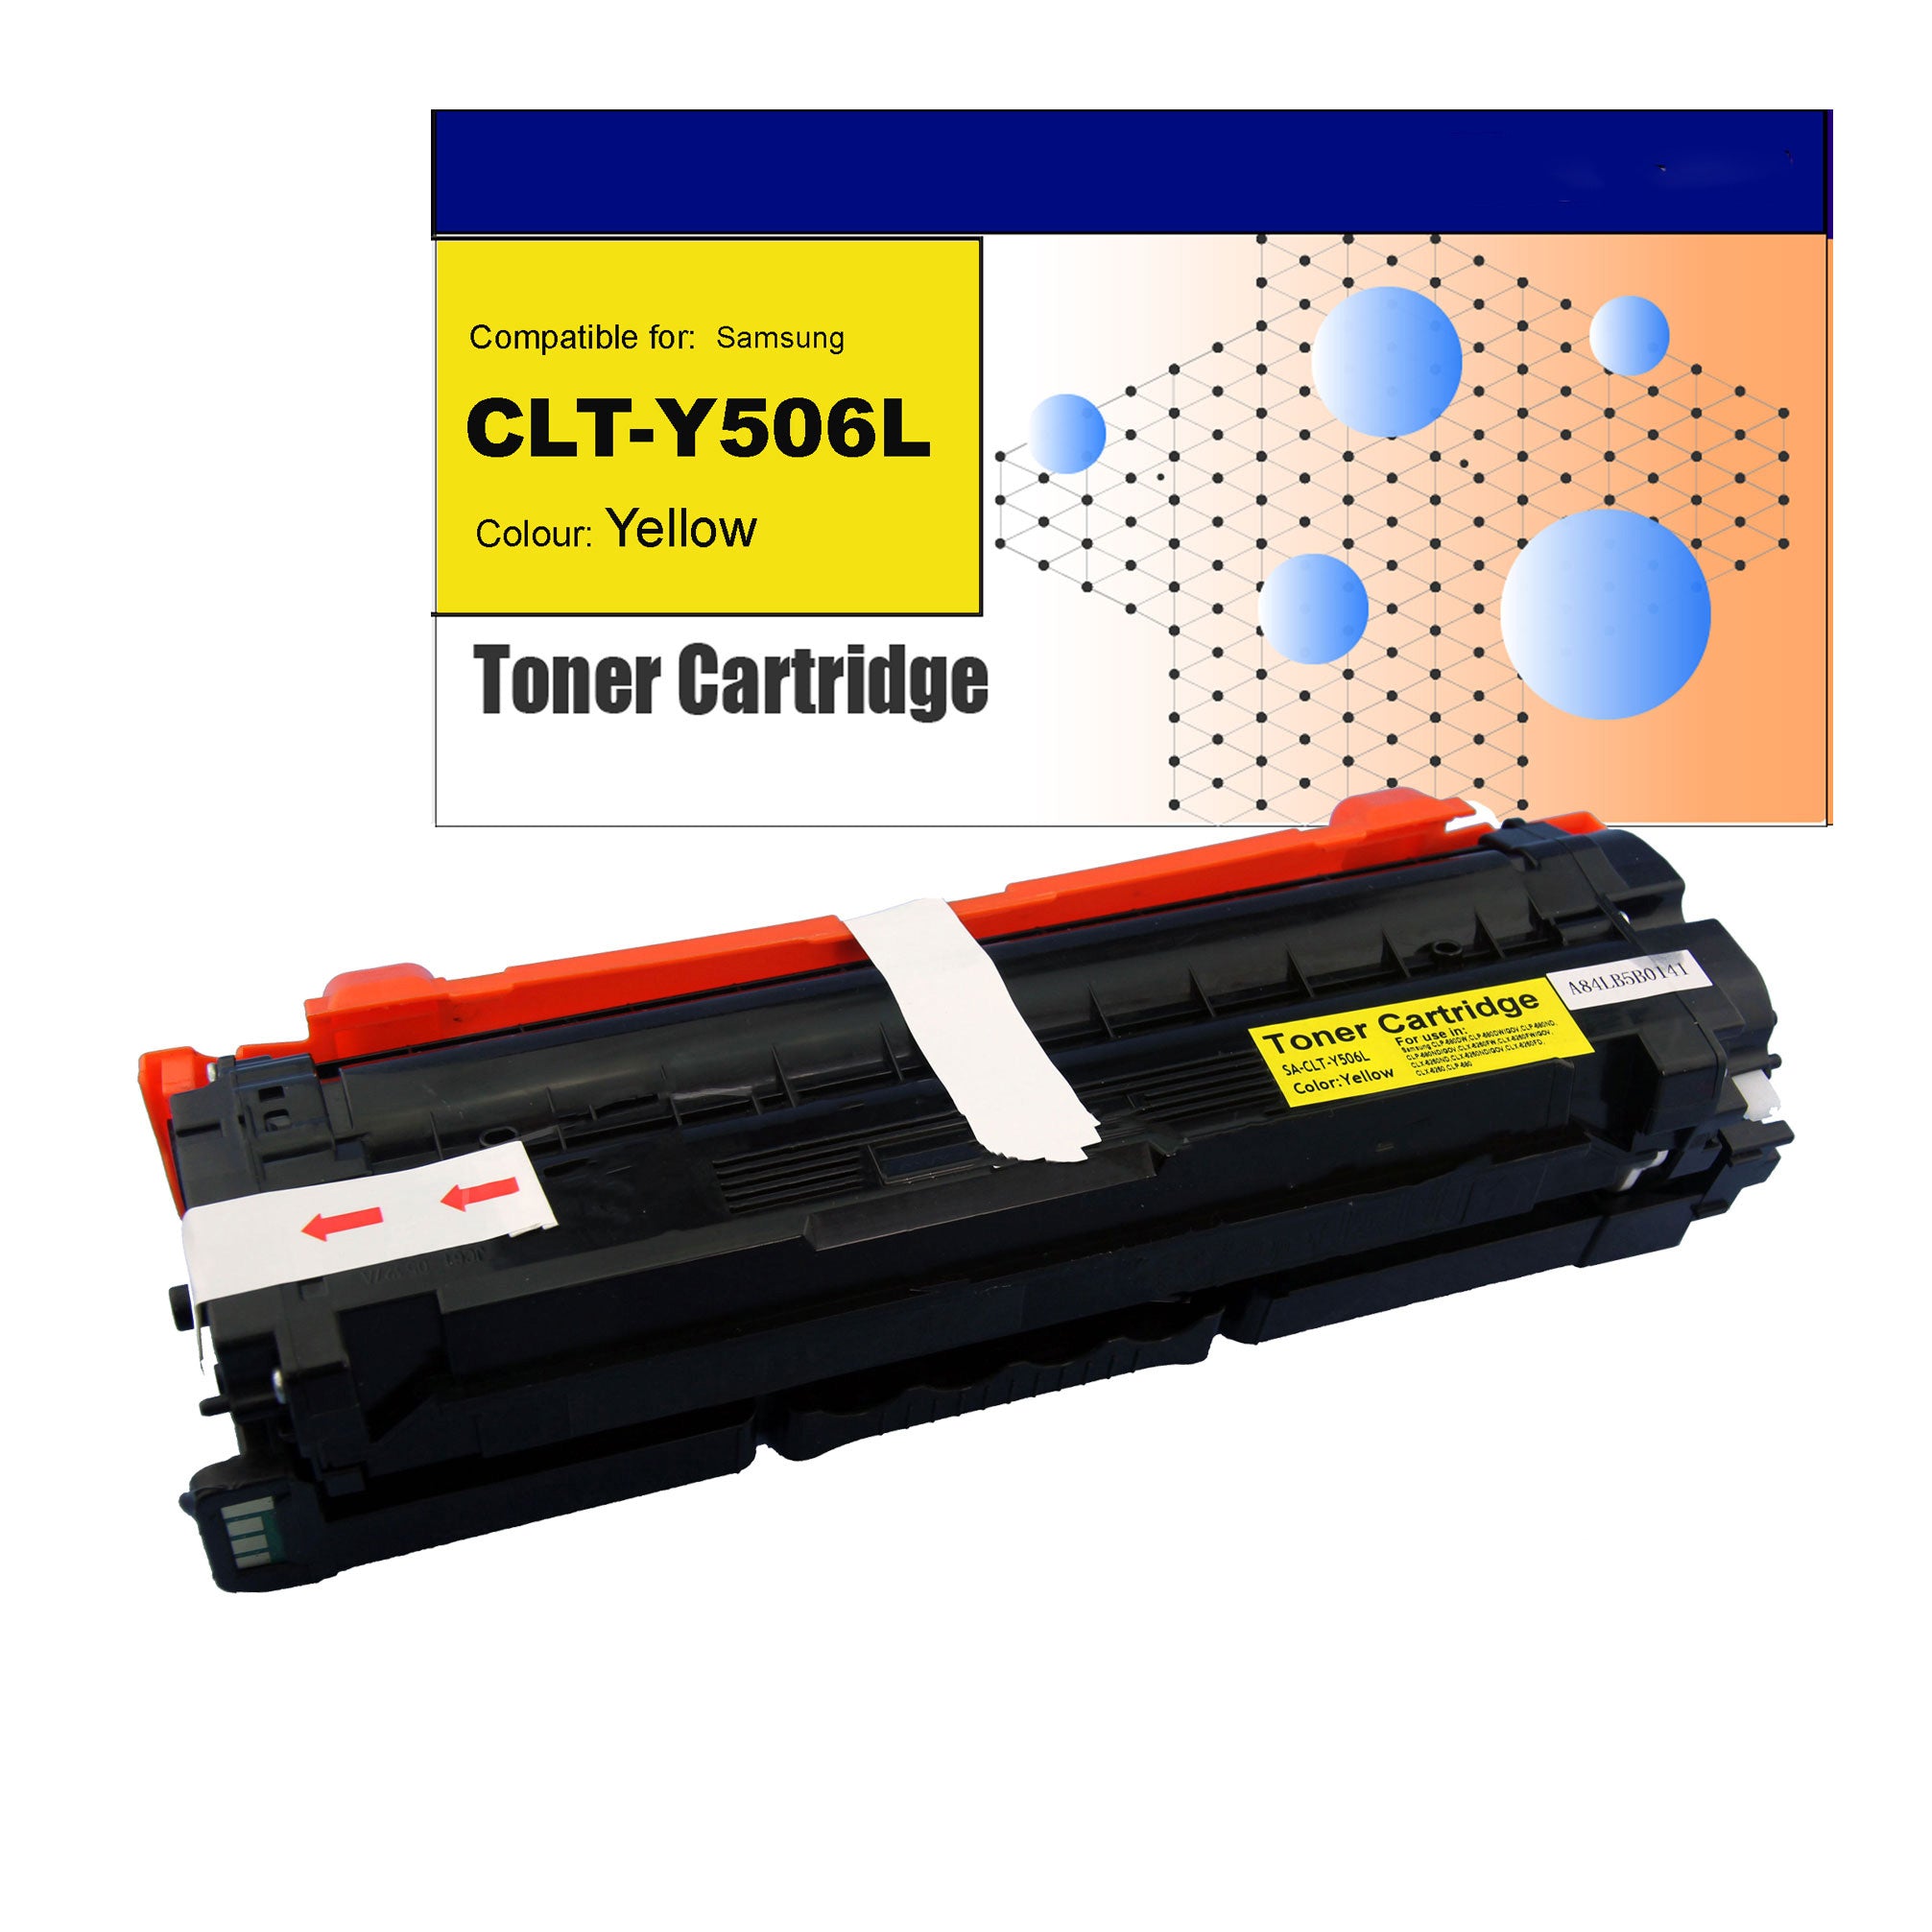 Compatible Toner for Samsung CLT-Y506L Yellow Toner Cartridges